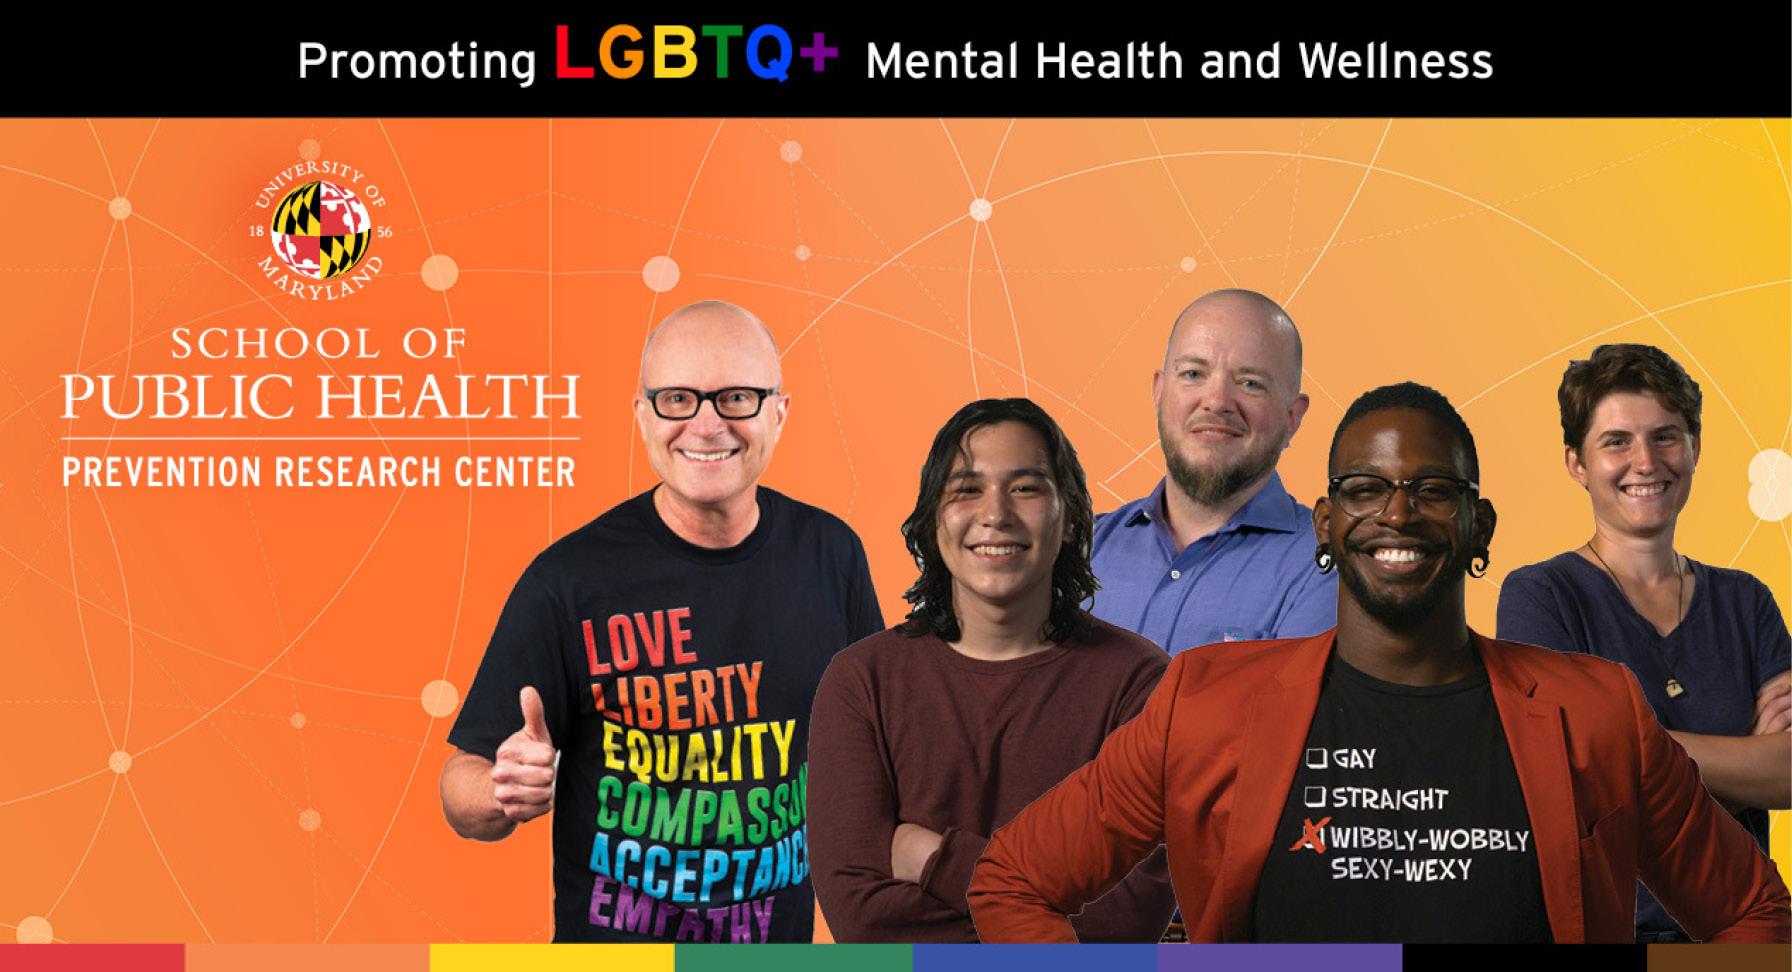 Diverse group of LGBTQ+ individuals smiling